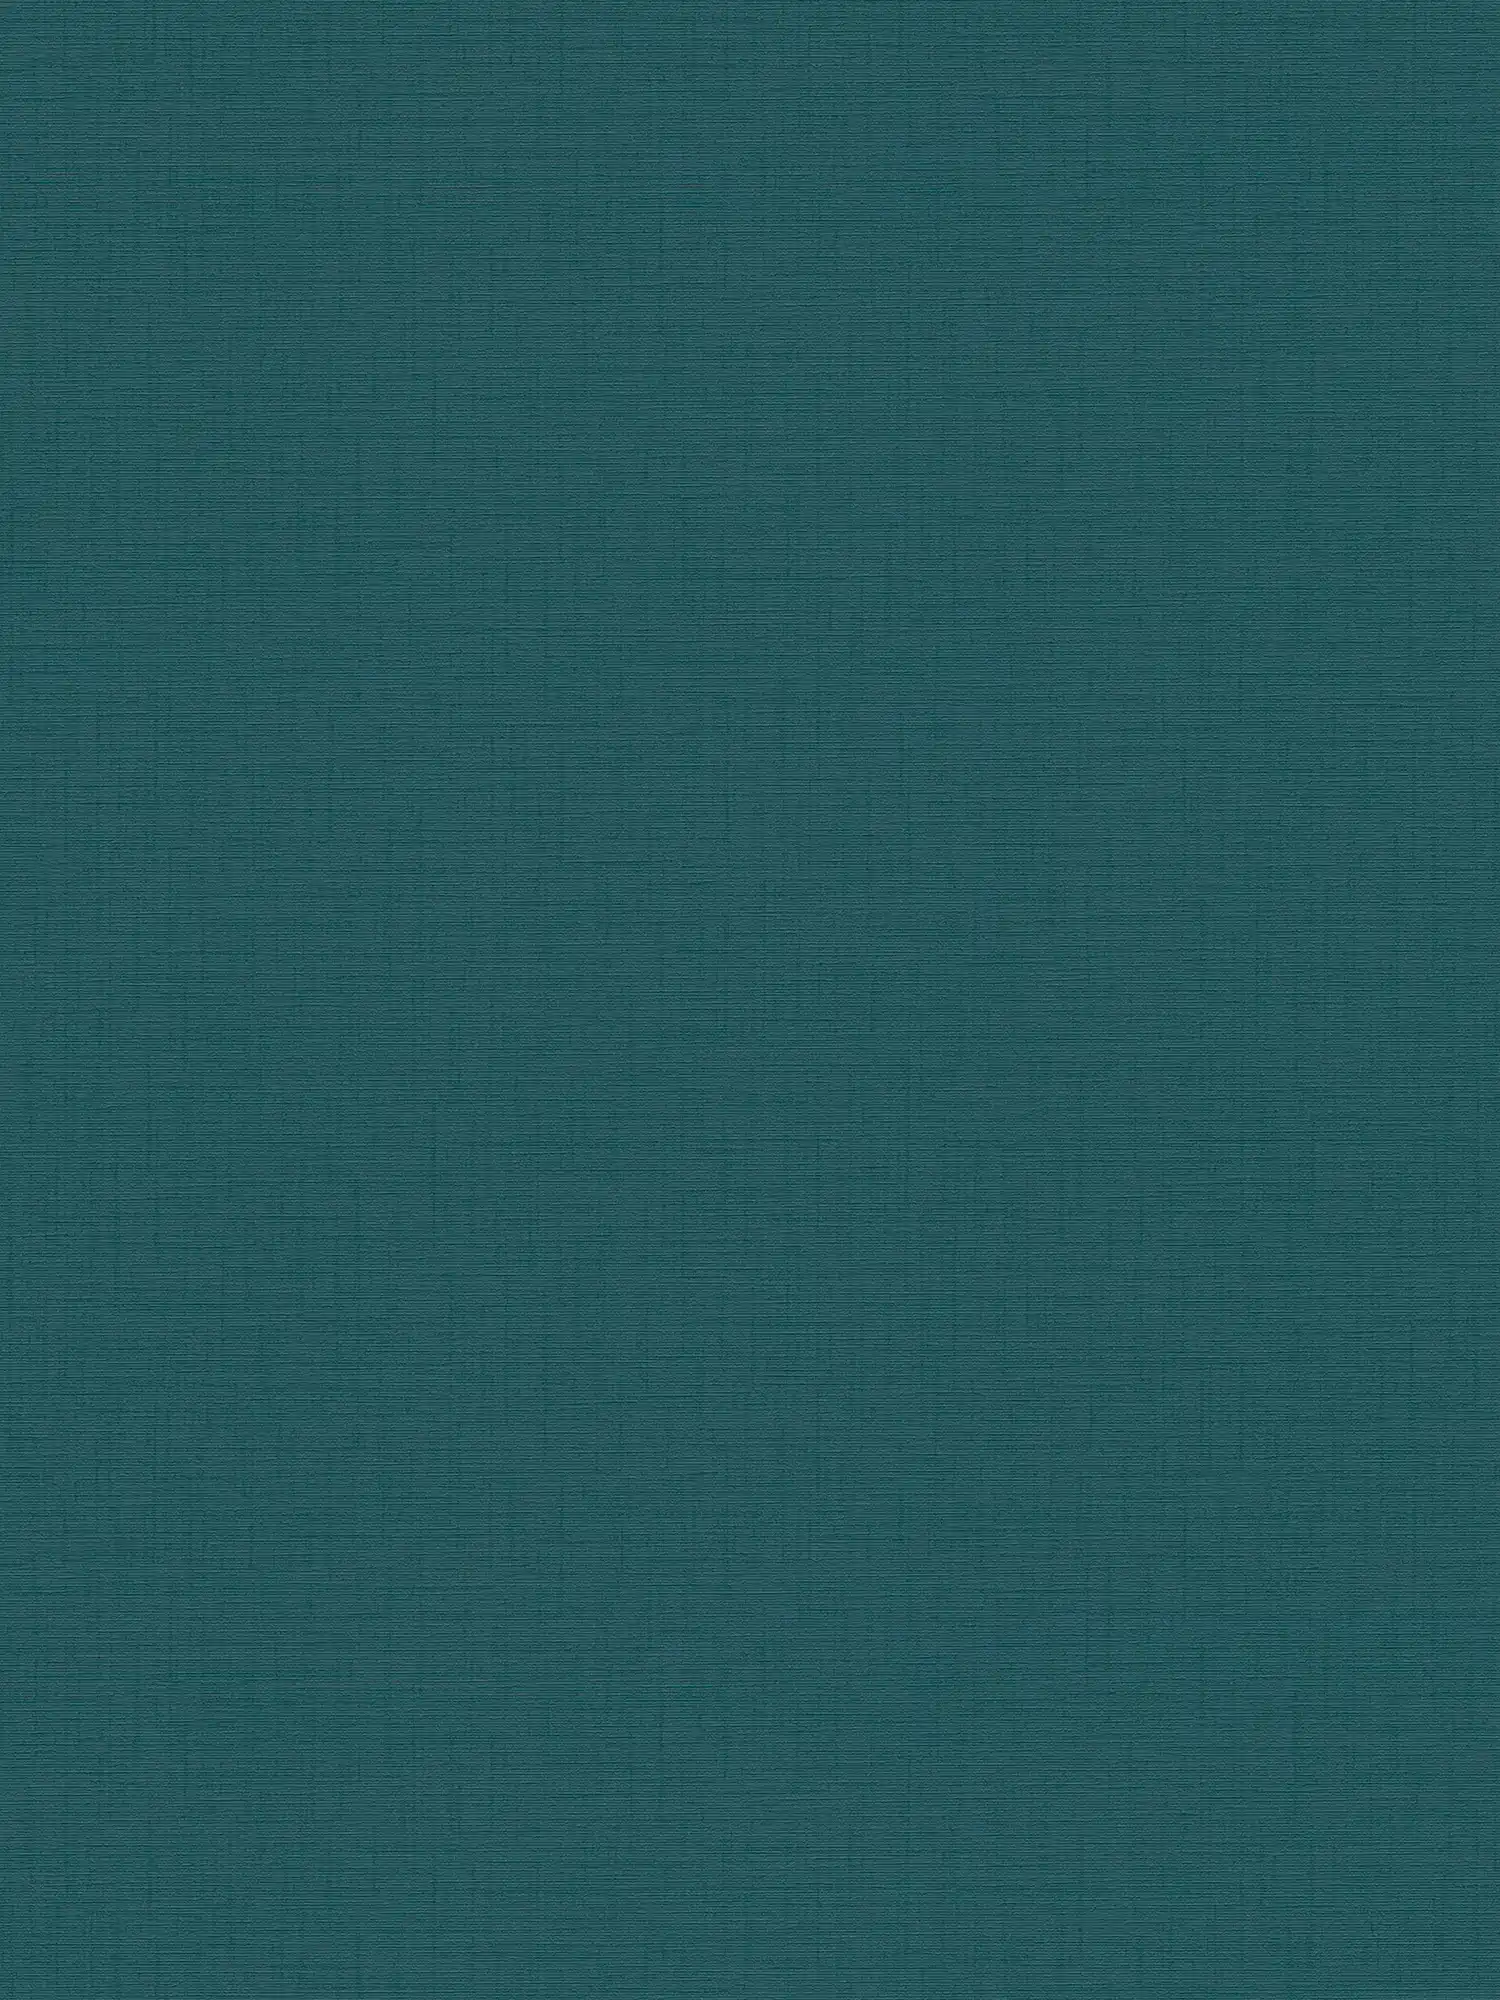 Petrol wallpaper plain colours with linen texture - blue, green
